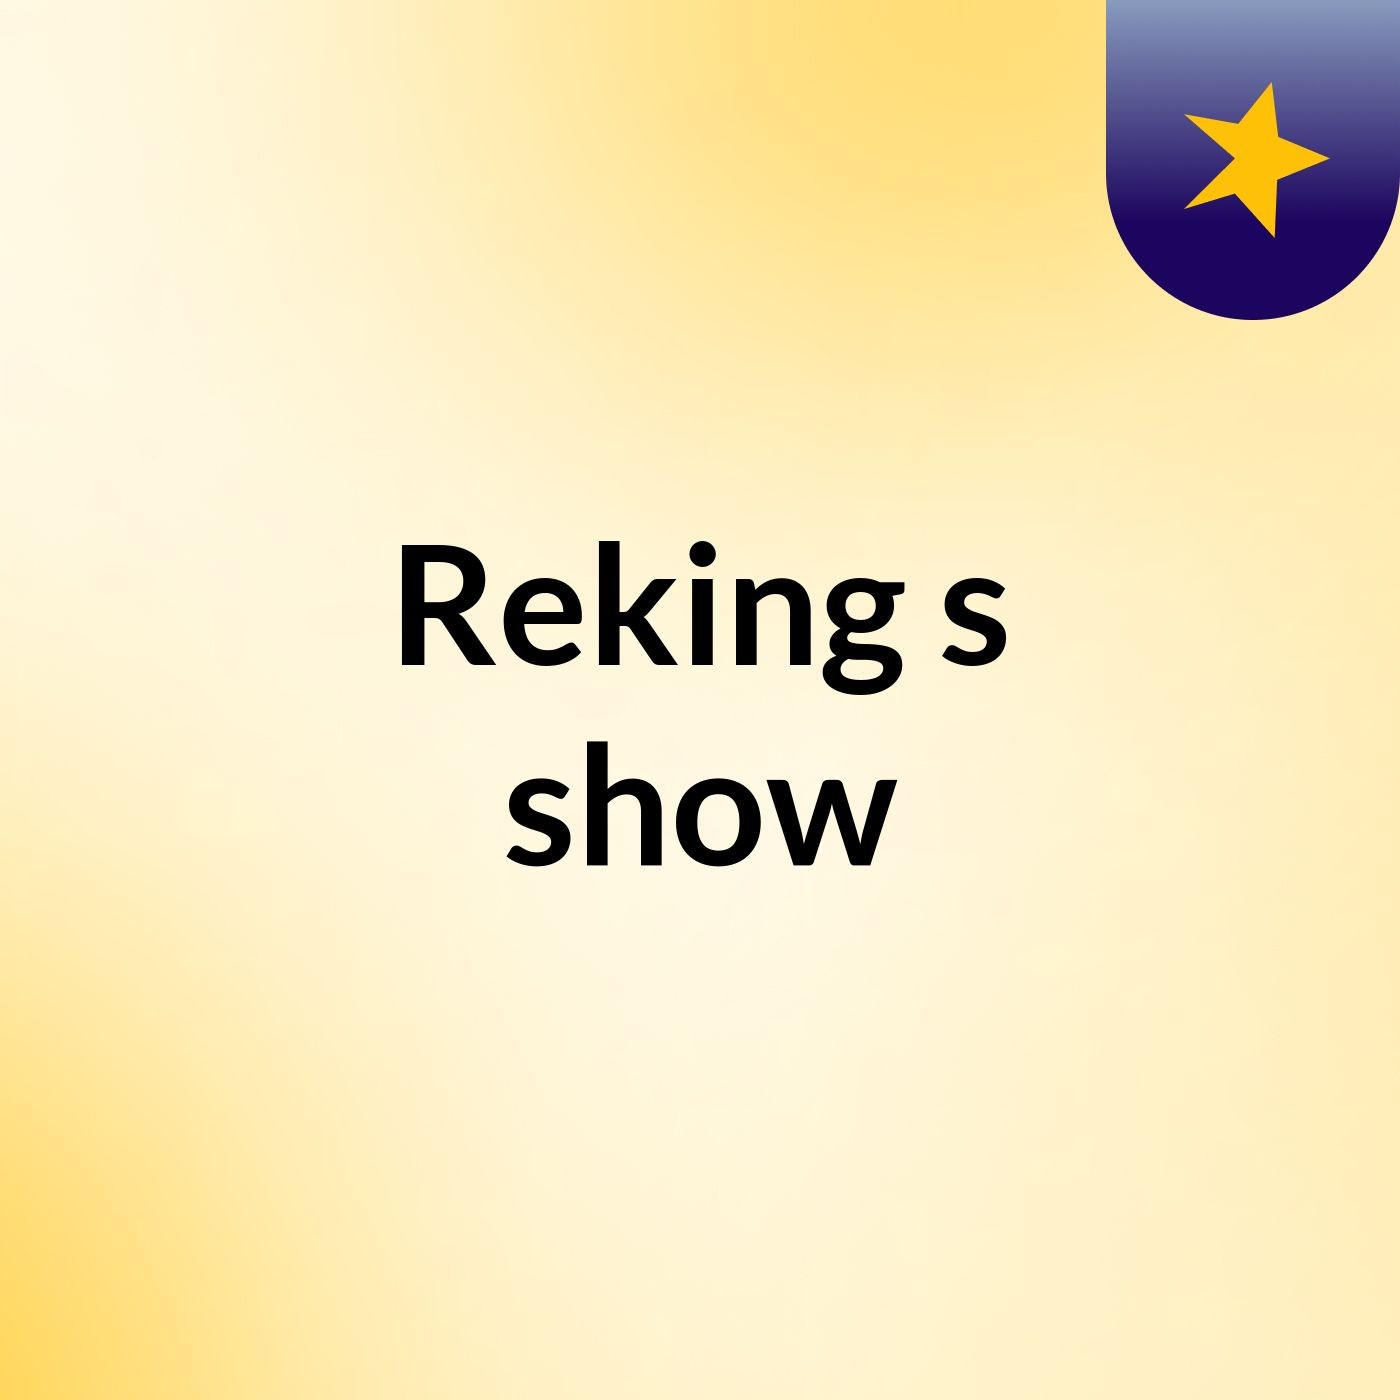 Reking's show